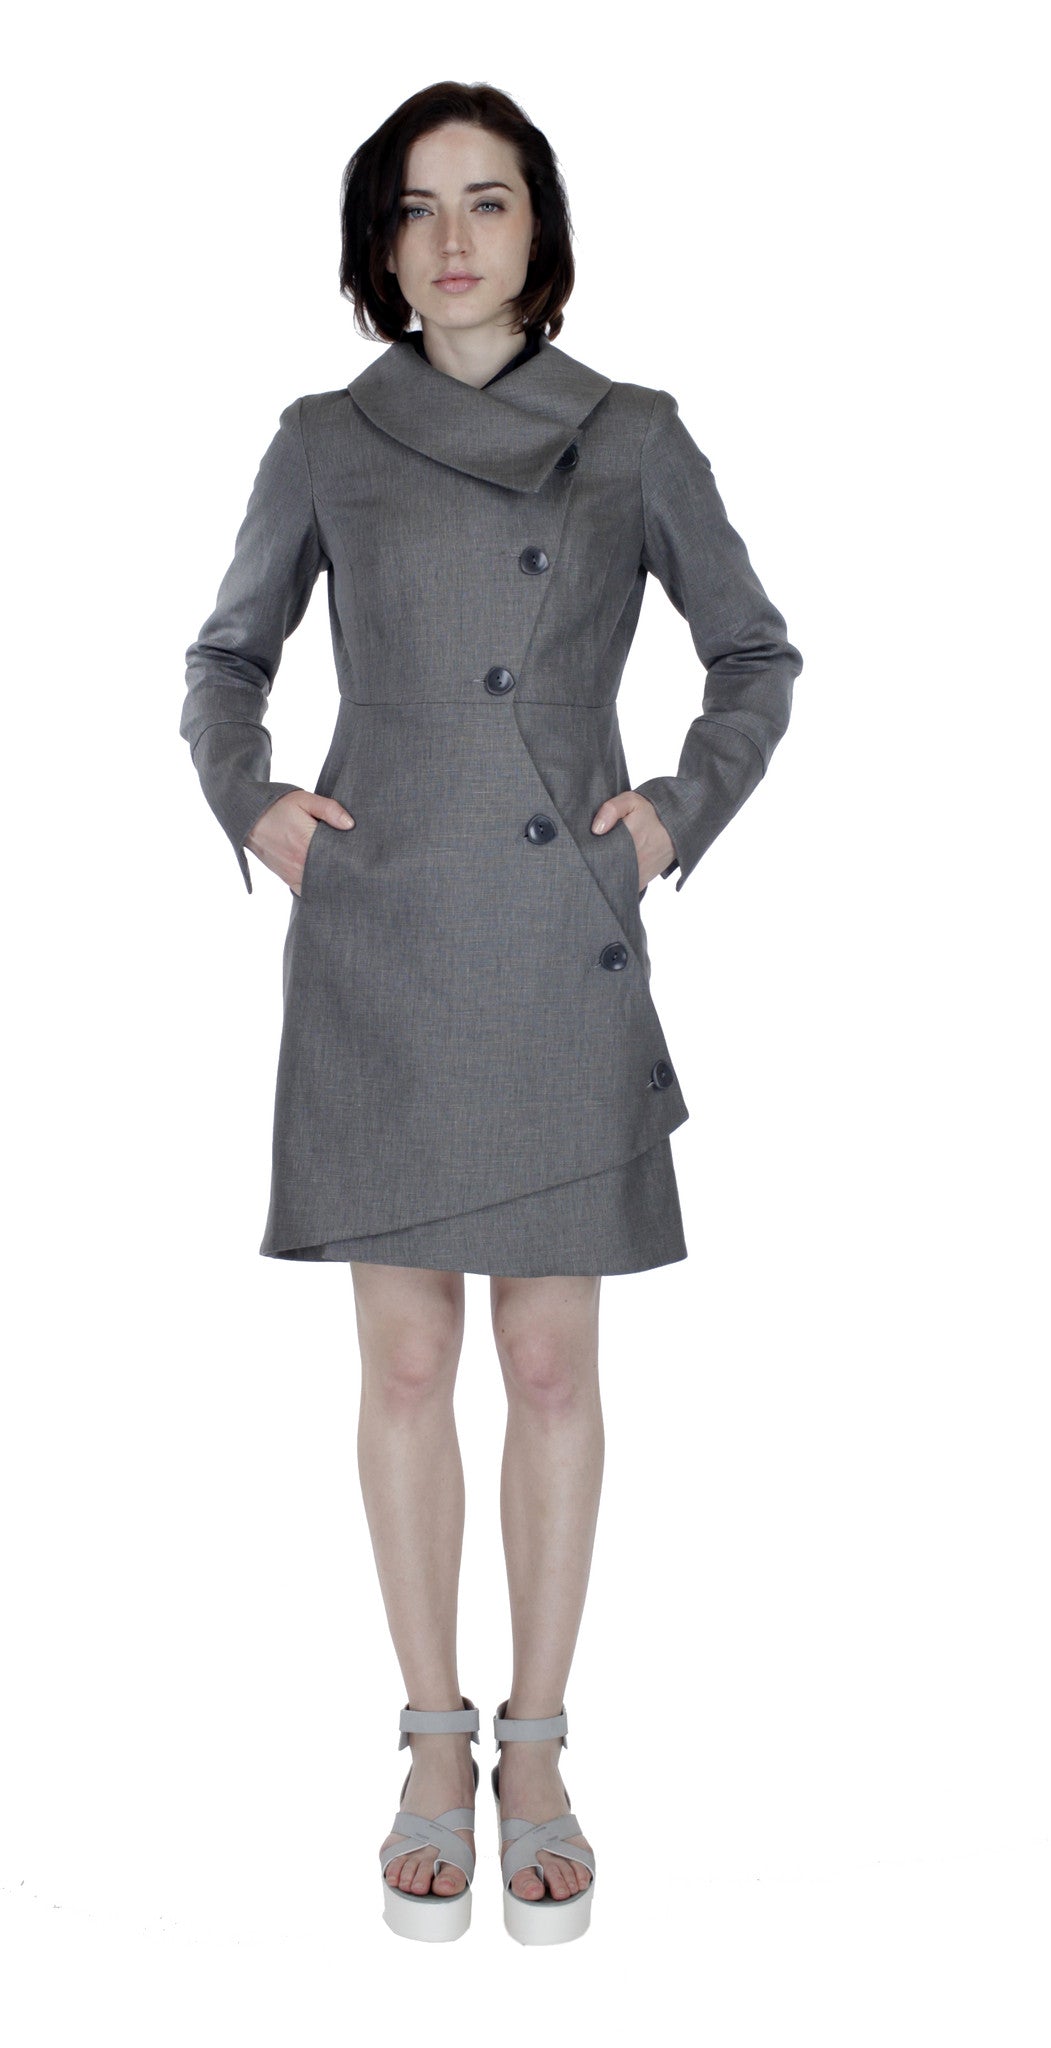 Swerve Jacket in Linen / Grey